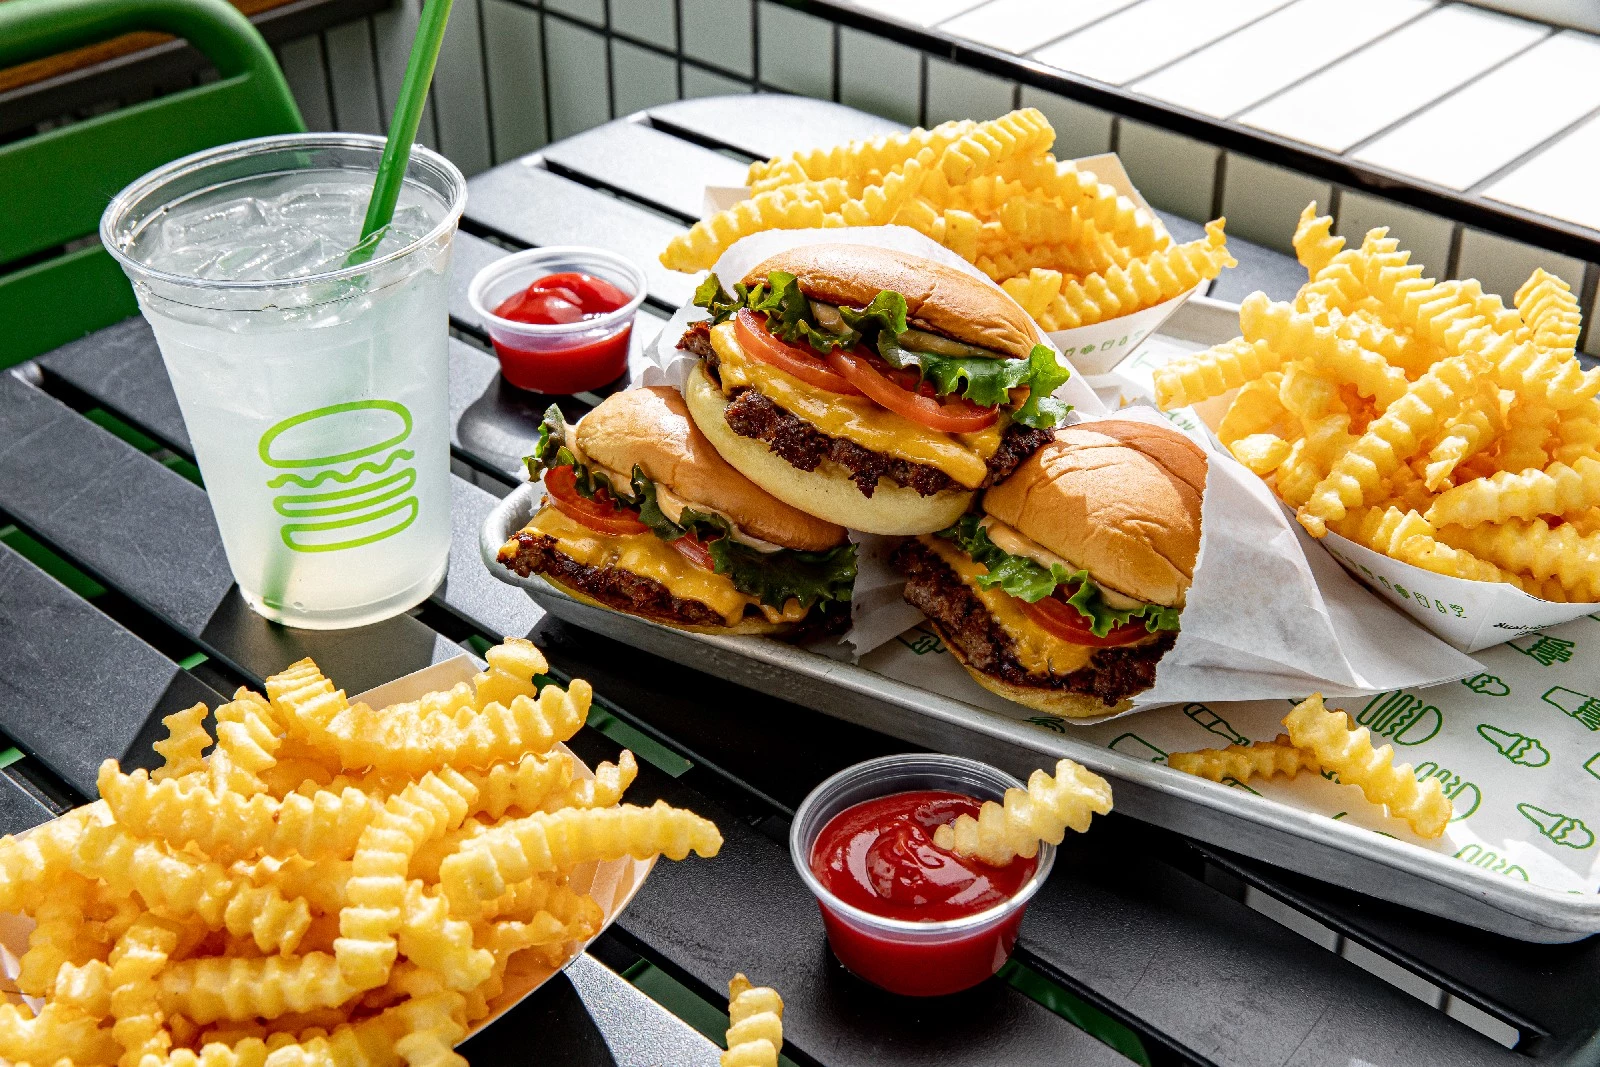 Shake Shack Korean menu review: Is the new Korean BBQ Burger worth it?